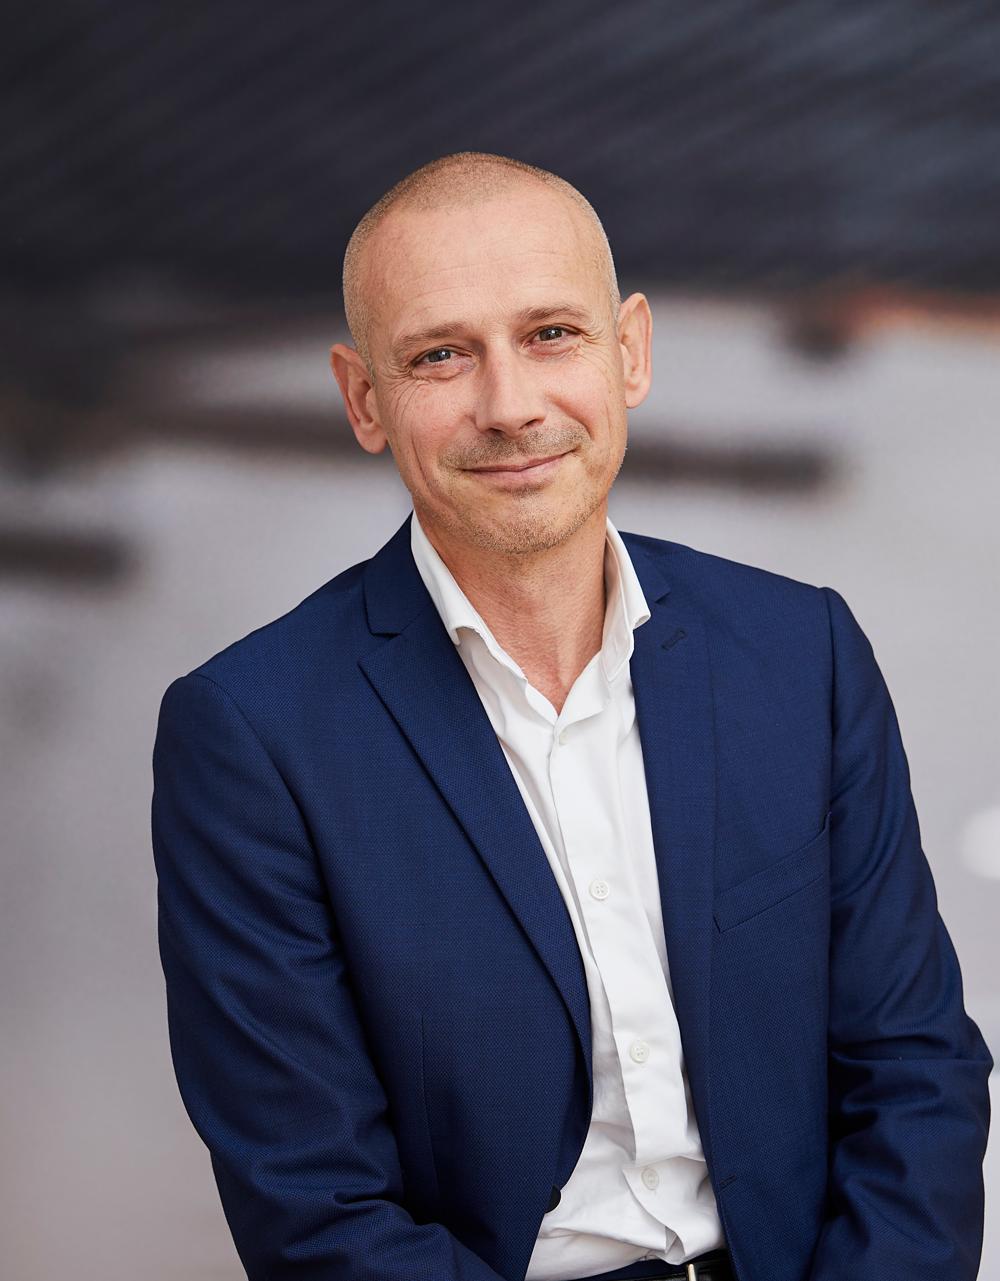 Henrik Hansen tiltrådte stillingen som adm. direktør i M+ Ejendomme den 16. maj 2022.